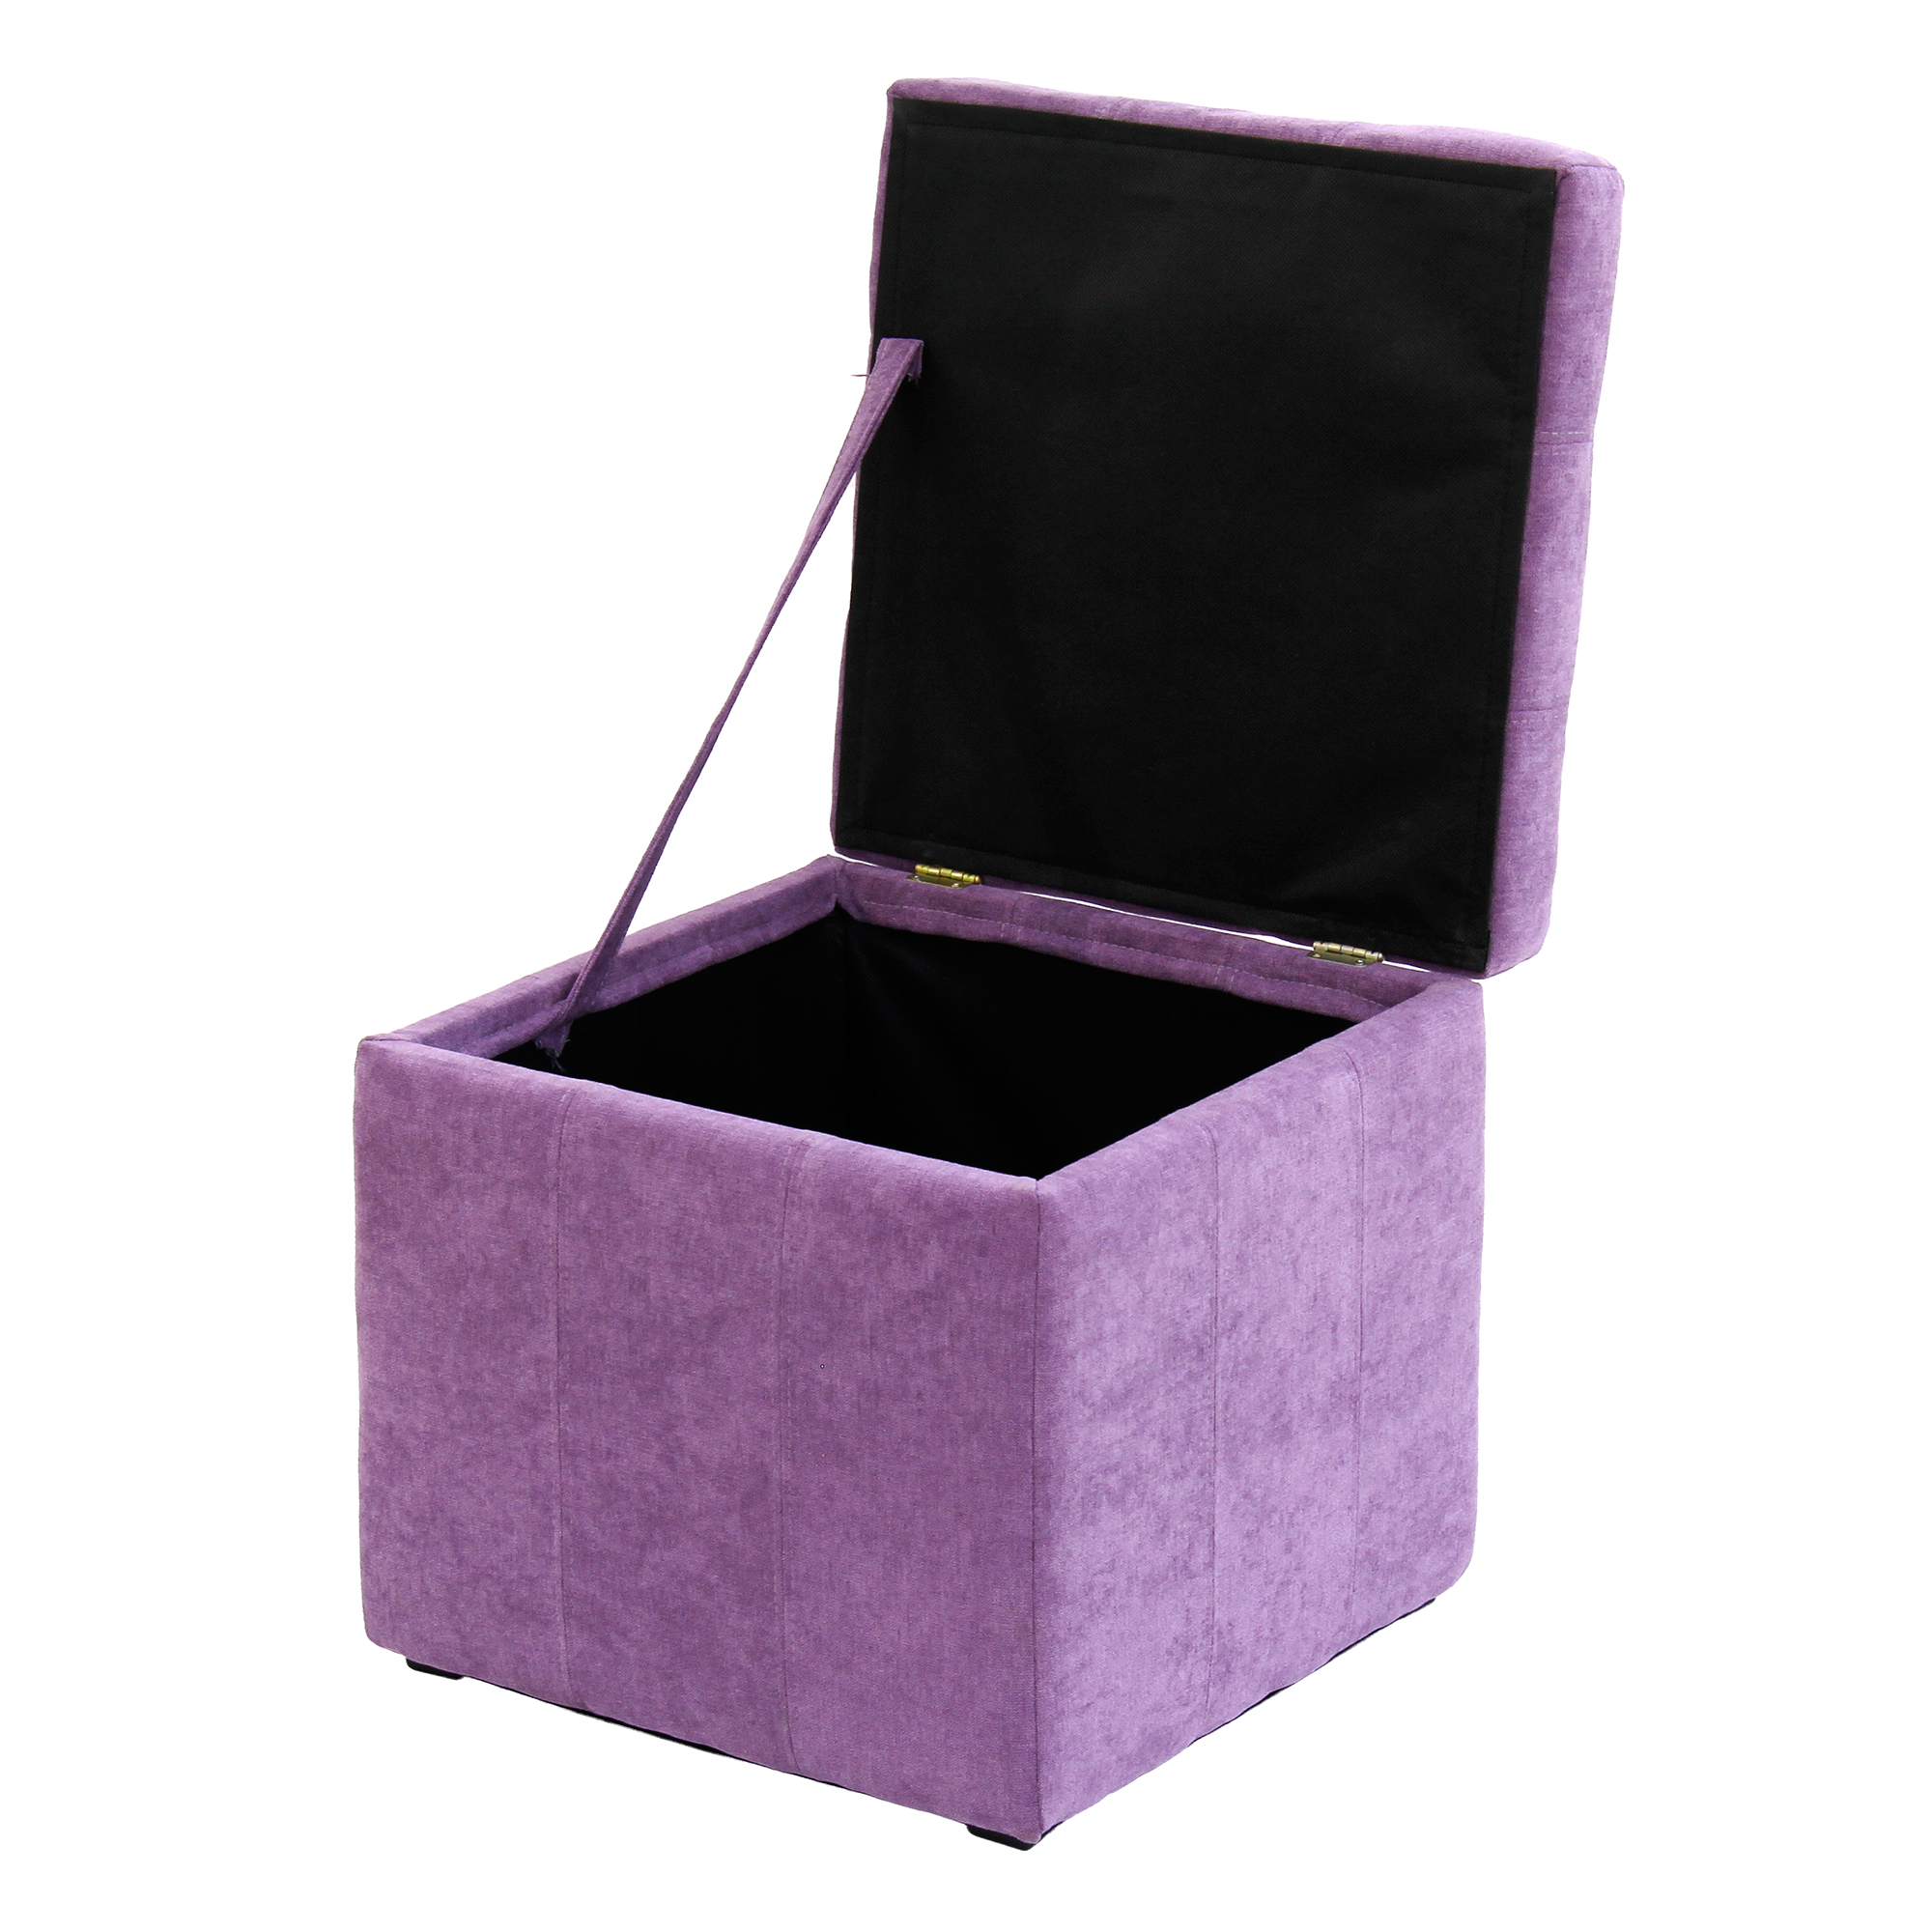 Банкетка Dreambag модерна фиолетовый велюр 46х46х46, размер 46х46х46 см - фото 4